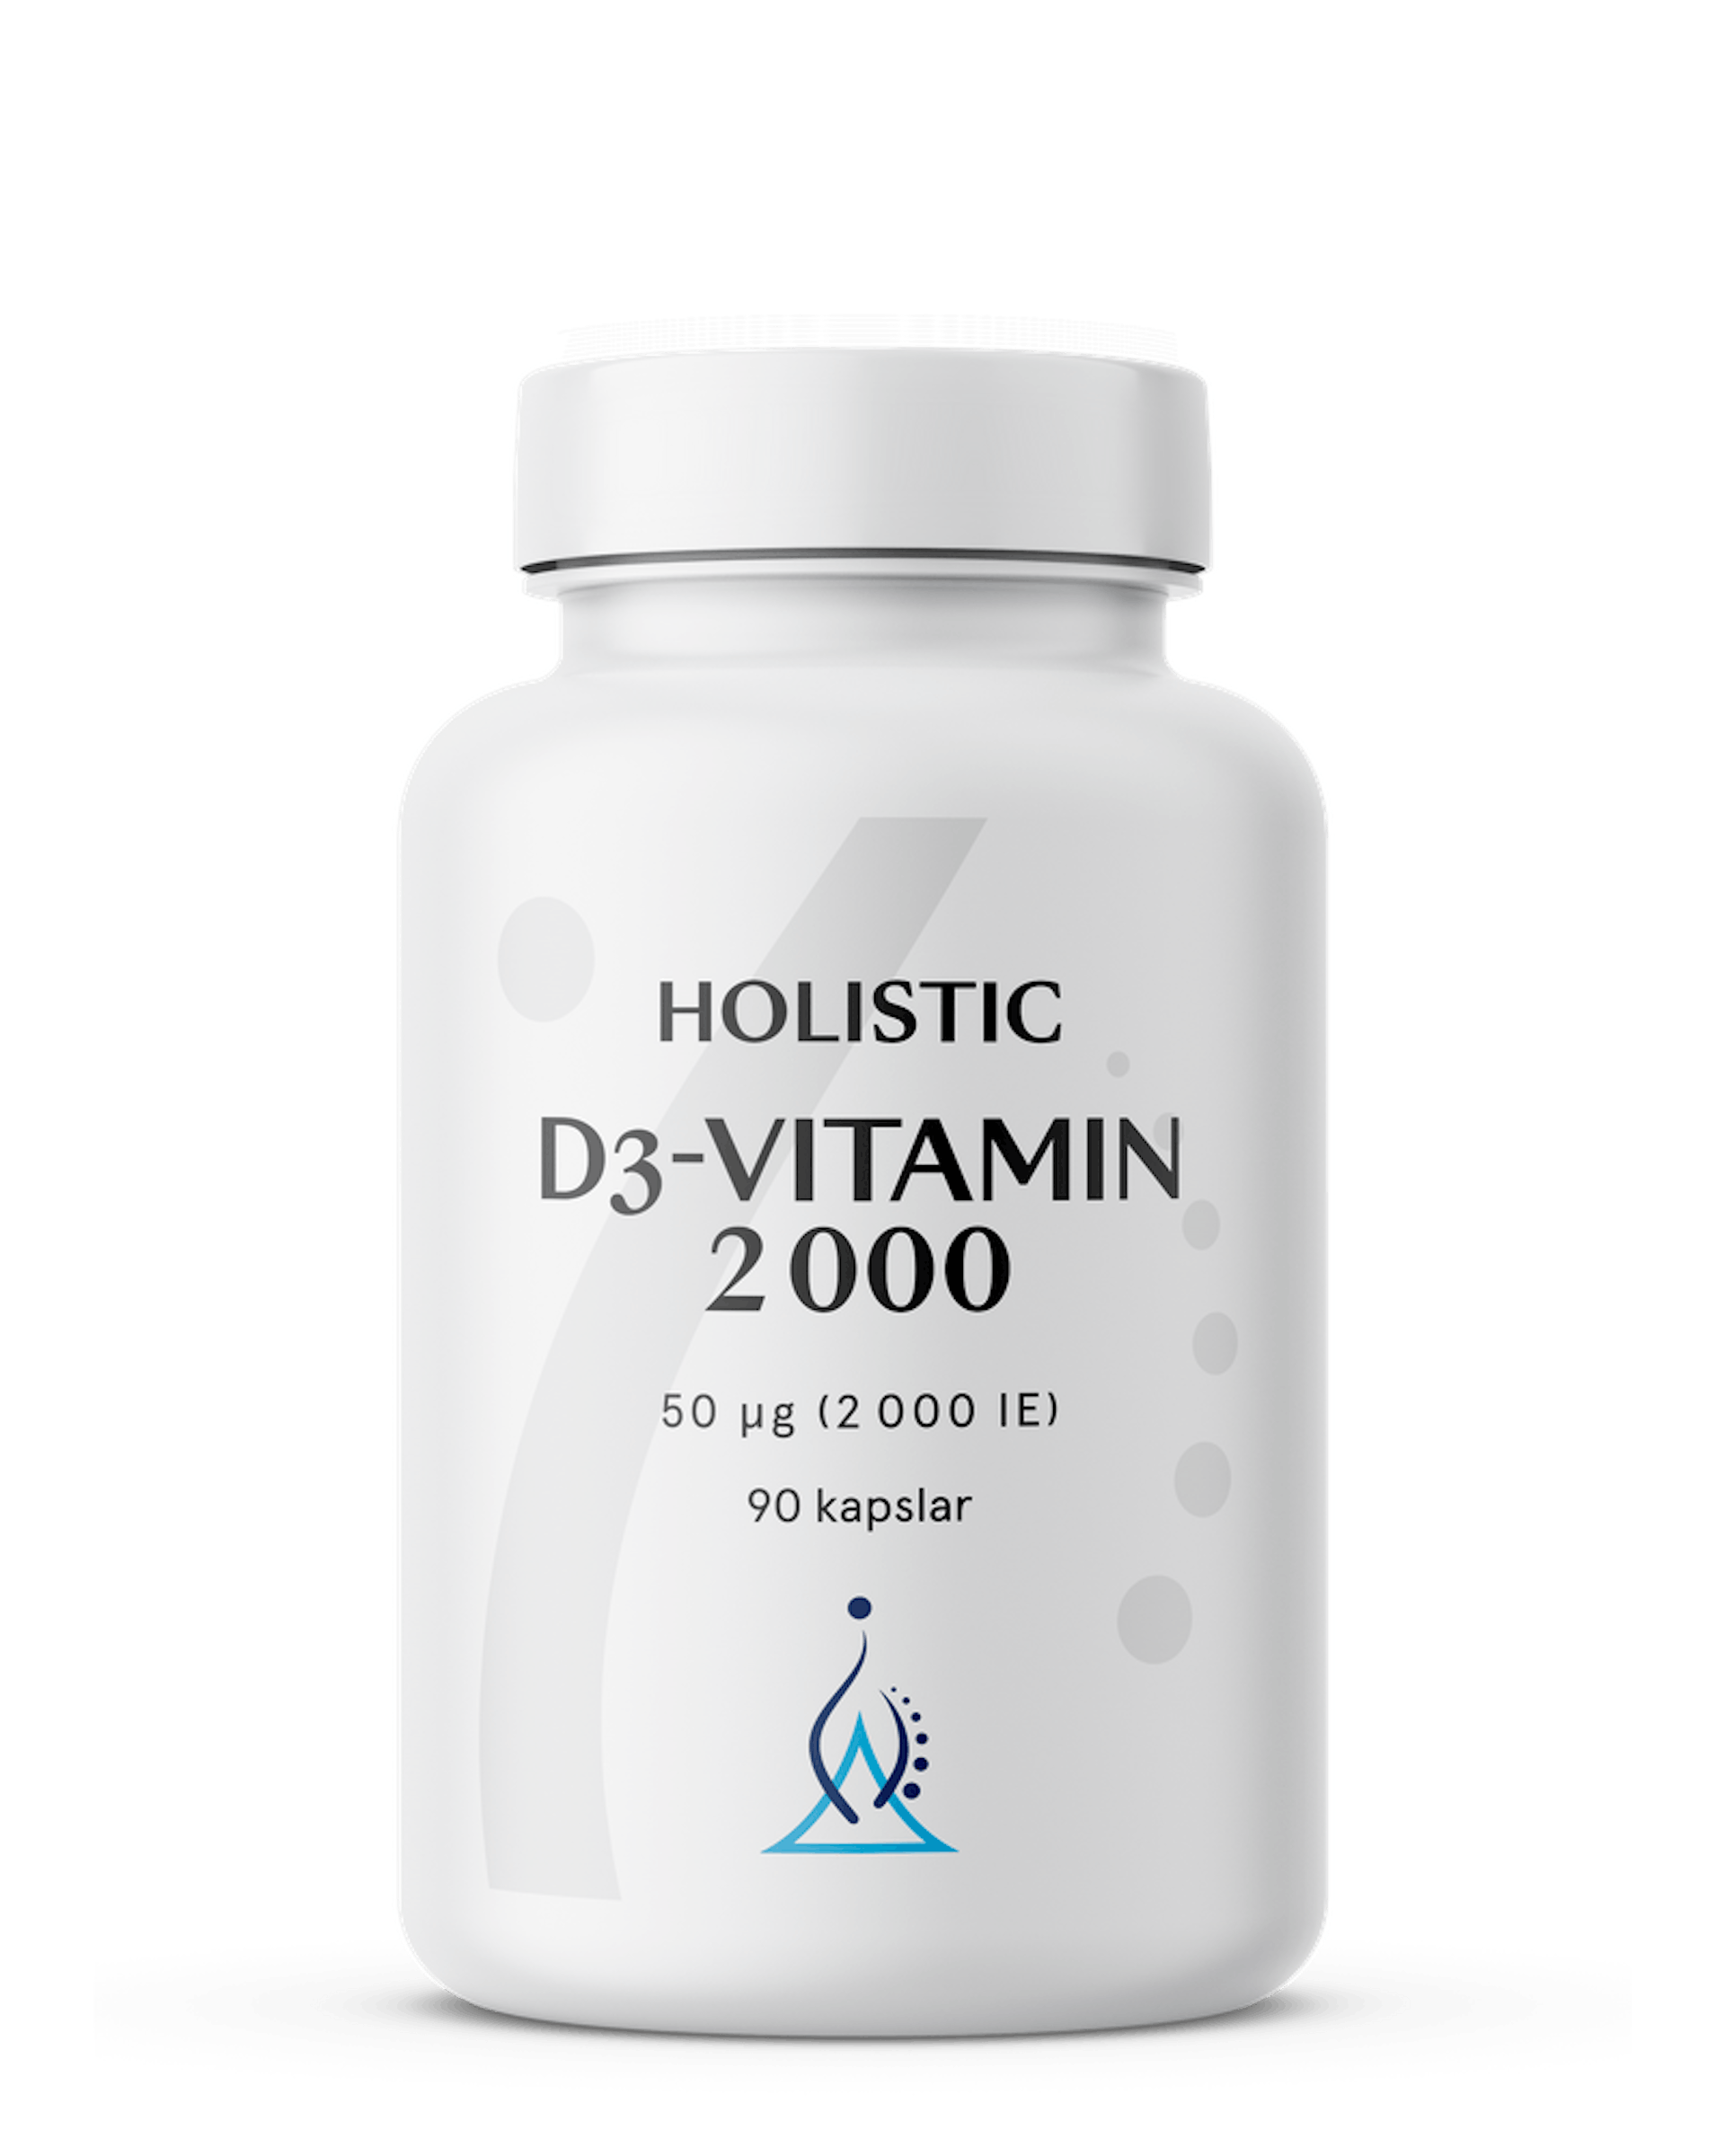 D3-vitamin 2000, 90 kapslar (1 av 2)